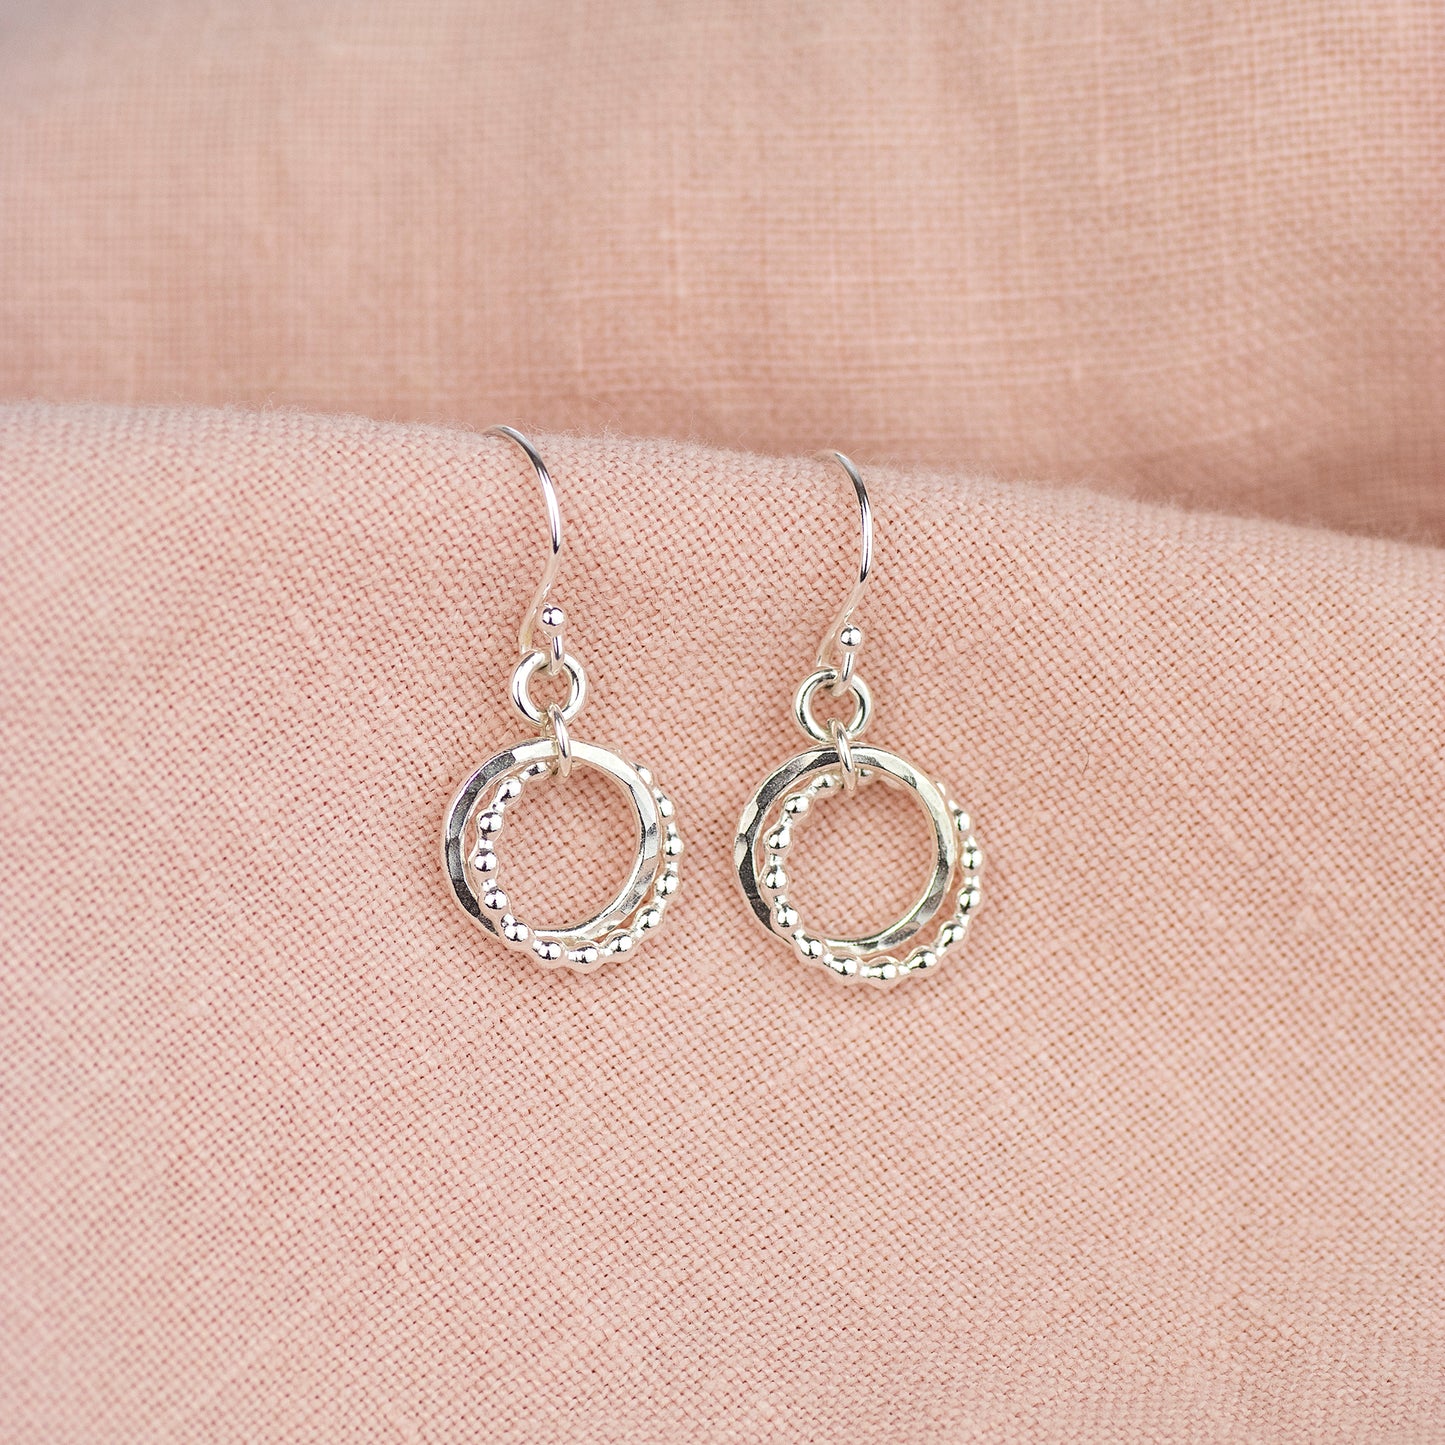 Sisters Earrings - 2 Sisters Linked for a Lifetime - Silver Love Knot Earrings